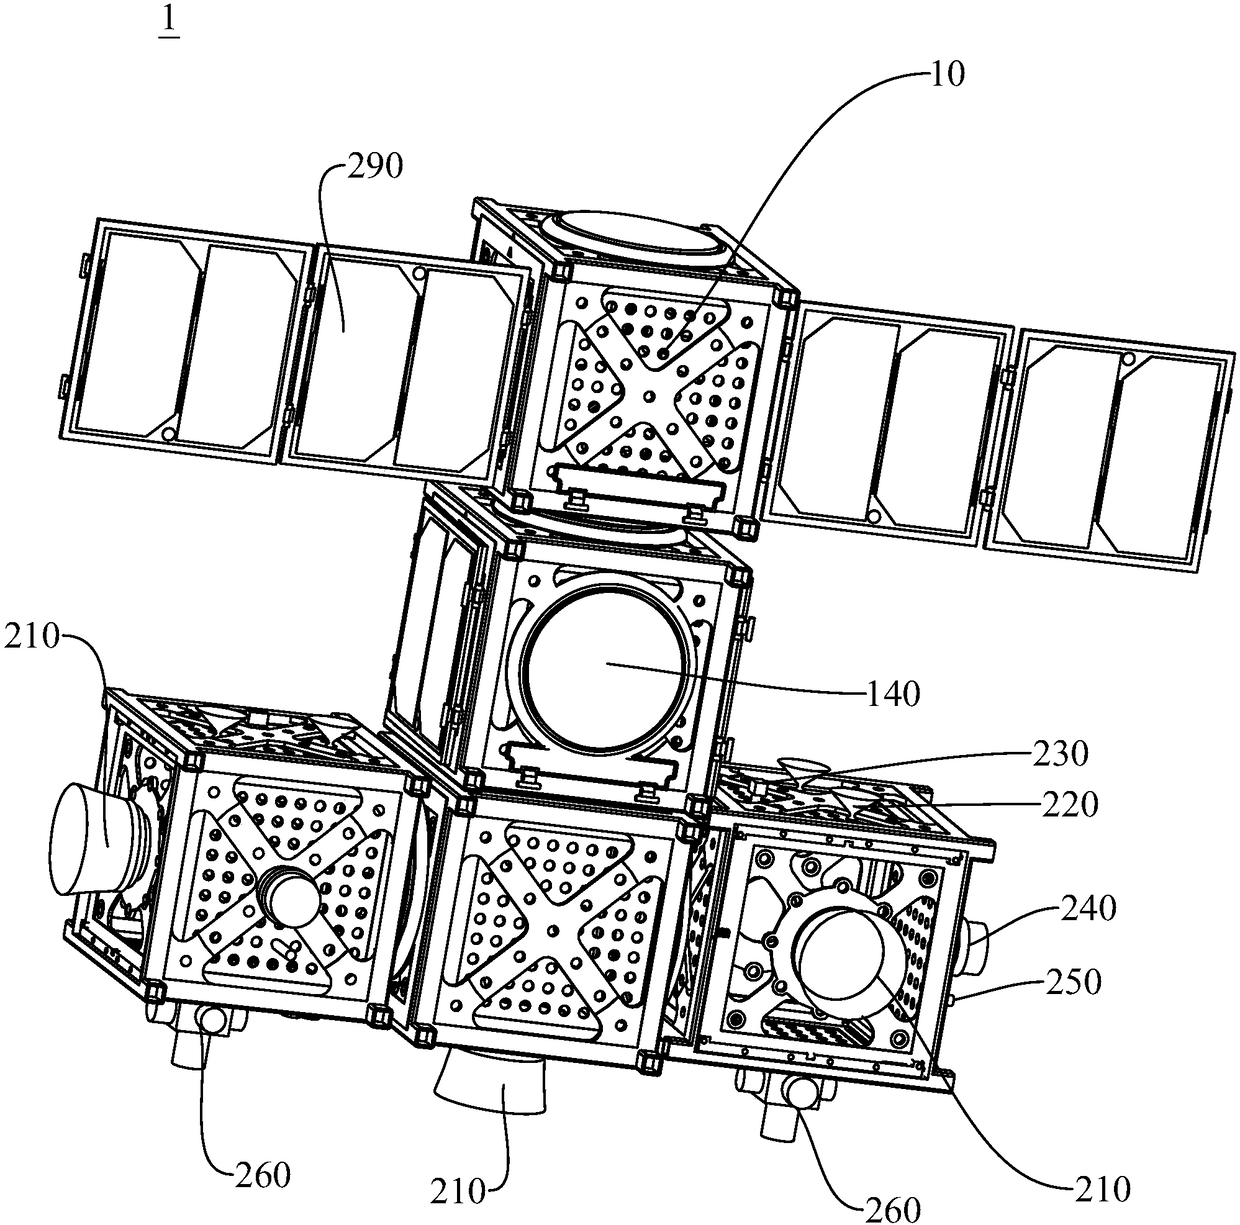 Modular spacecraft capable of being deformed in orbit